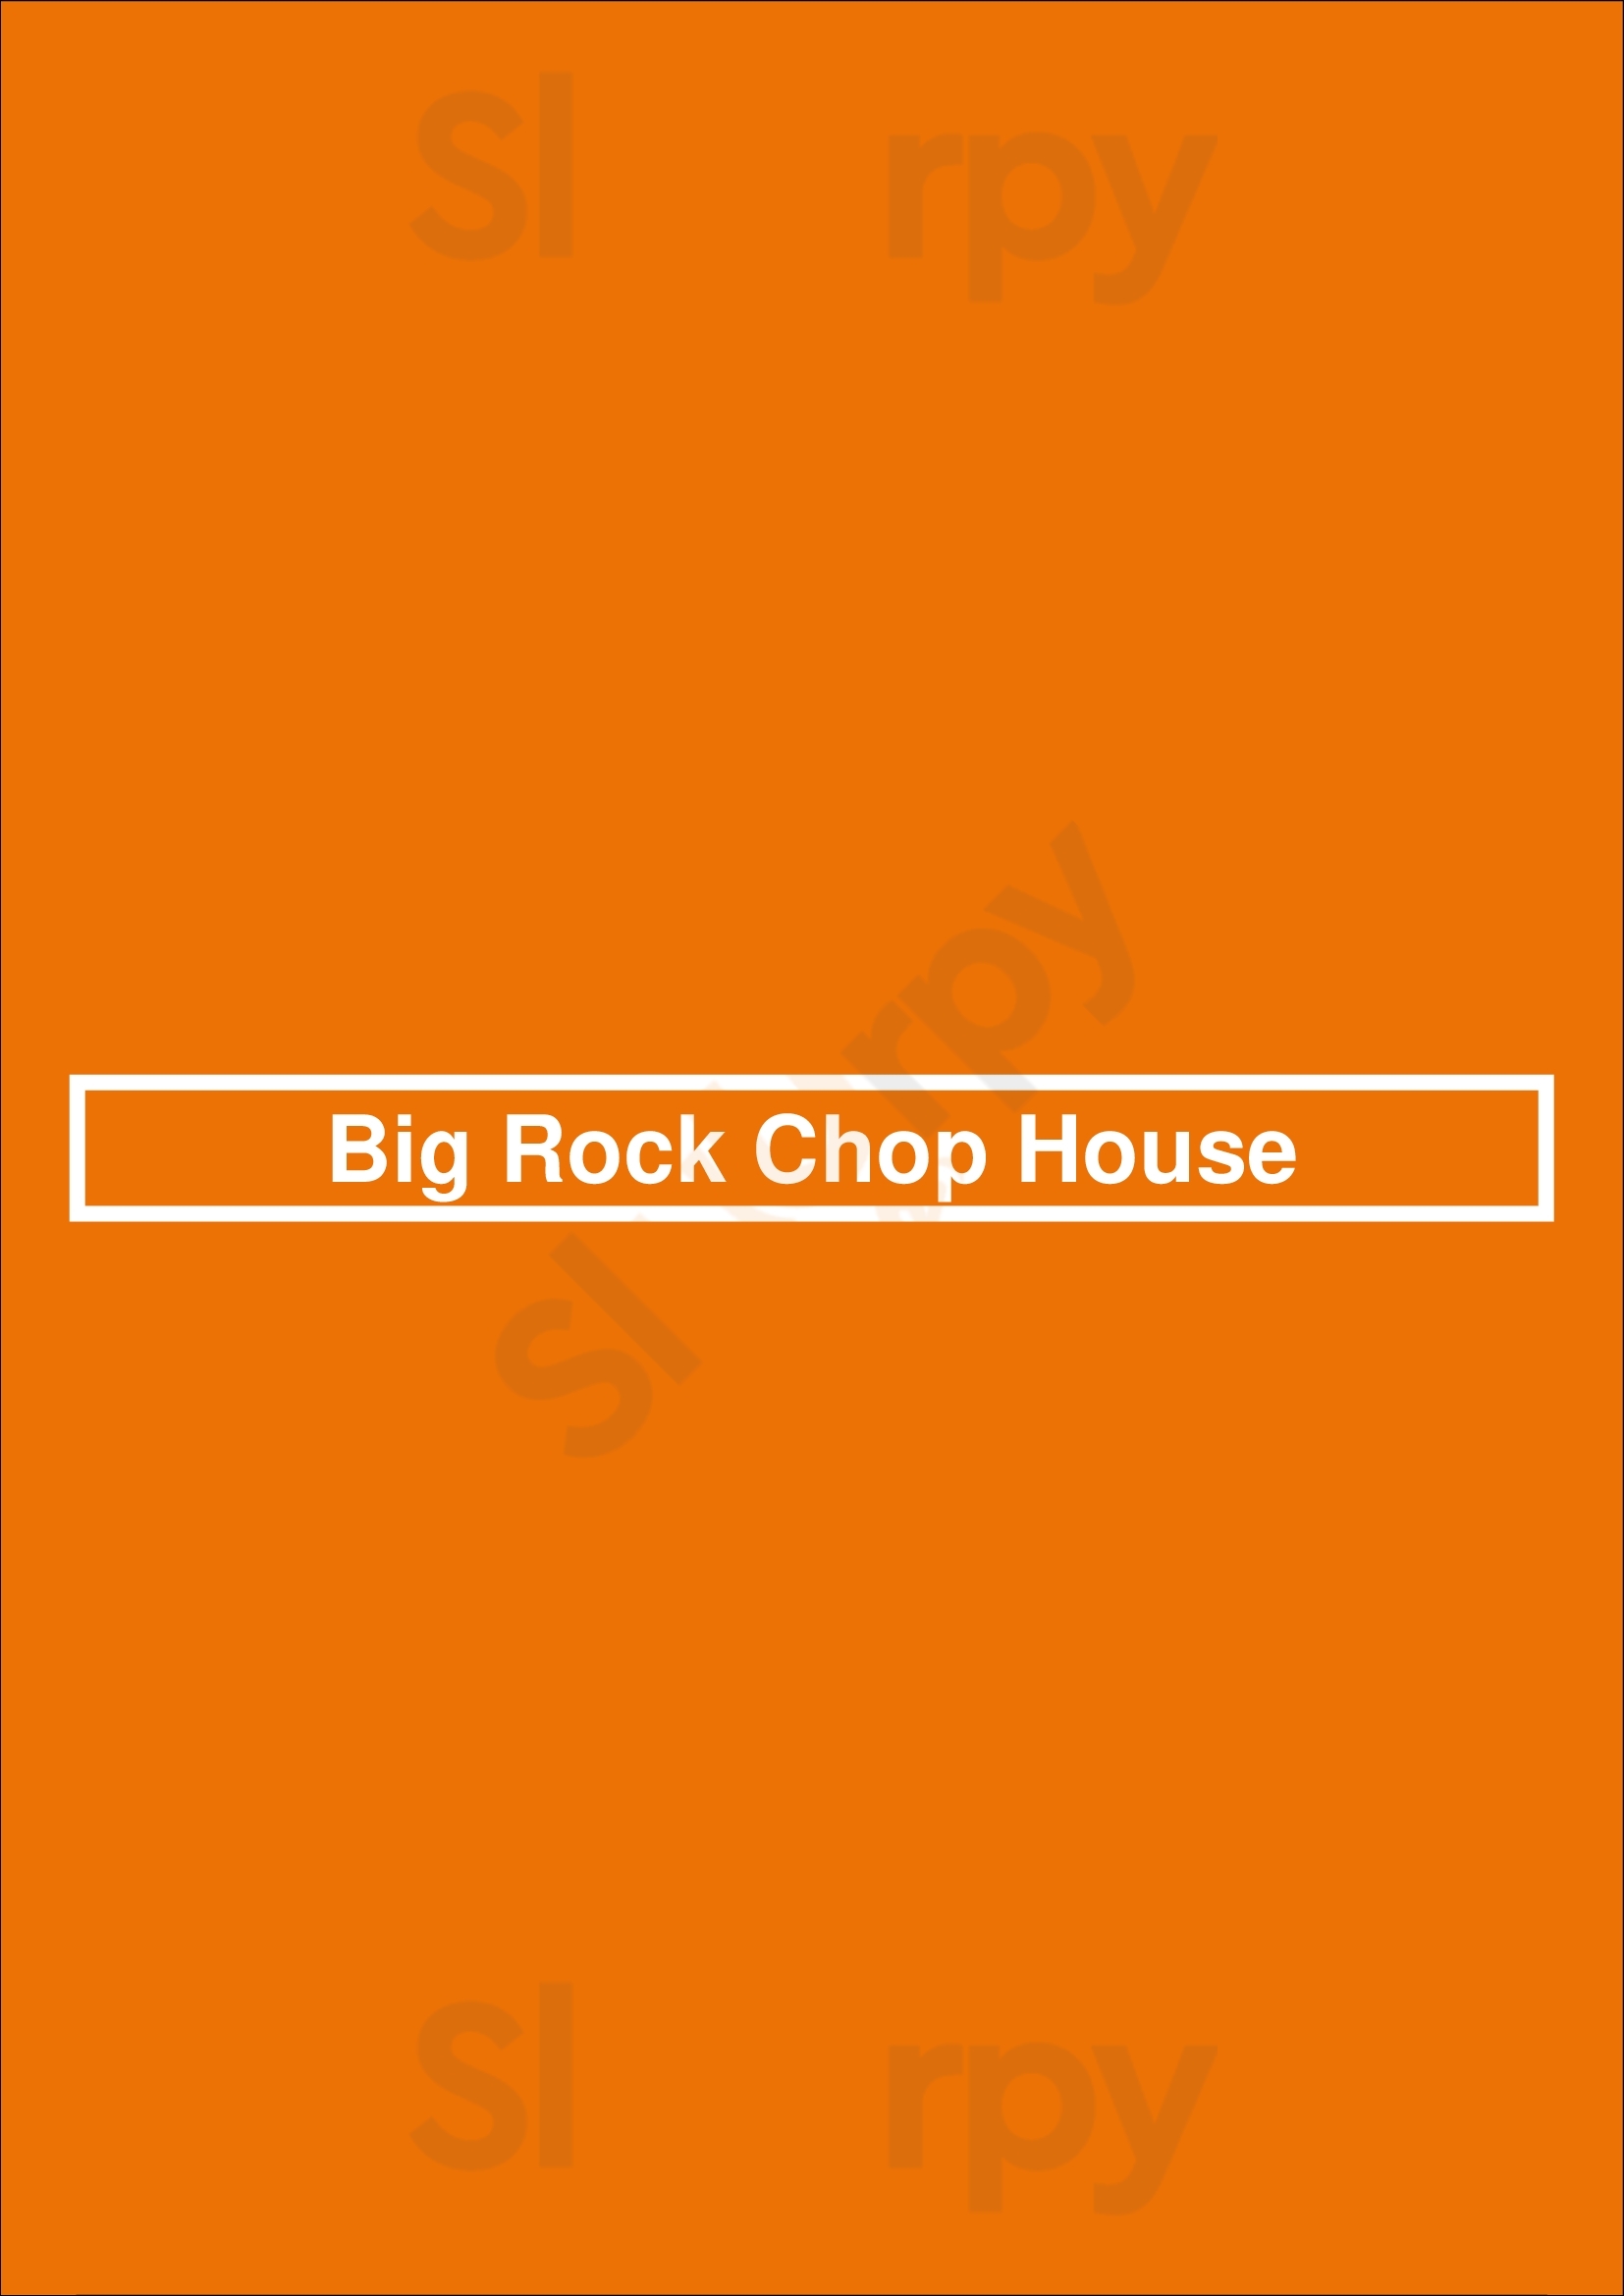 Big Rock Chop House Birmingham Menu - 1